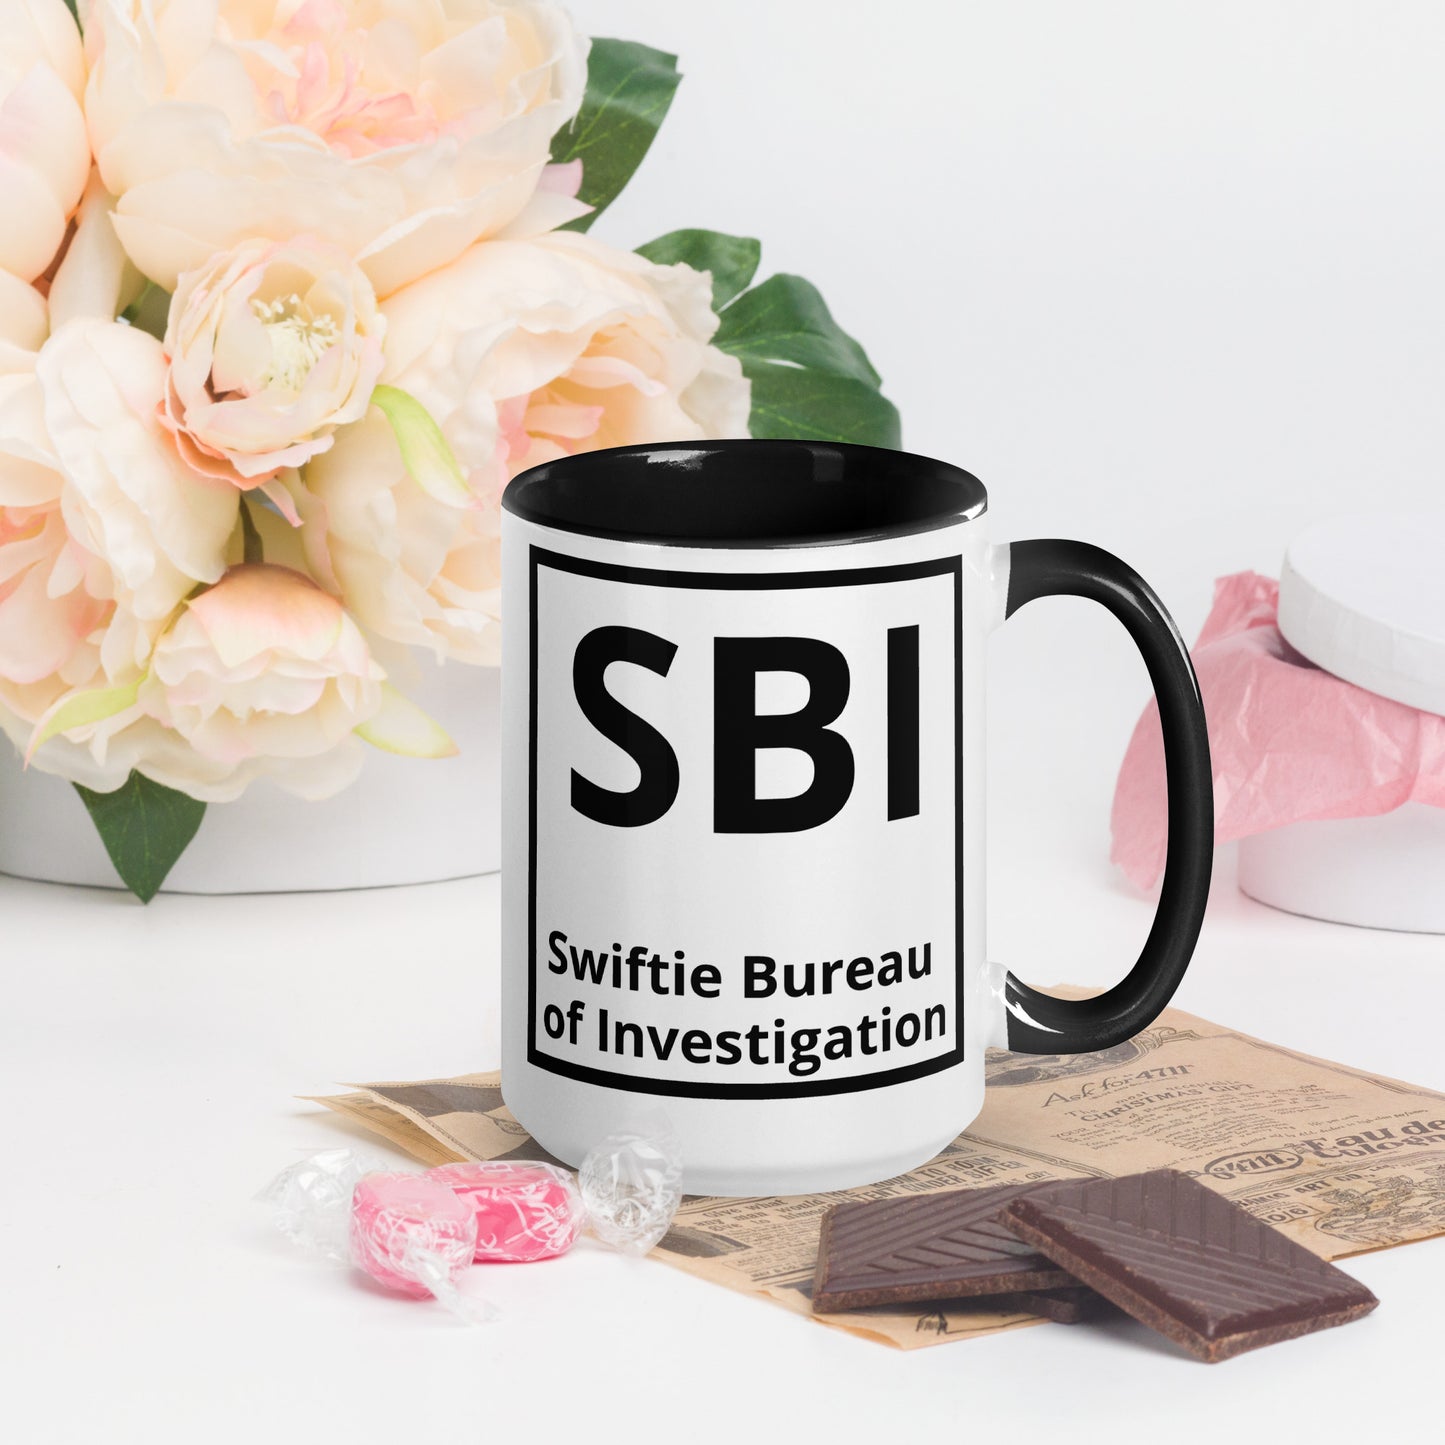 SBI Swiftie Bureau of Investigation Mug with Color Inside